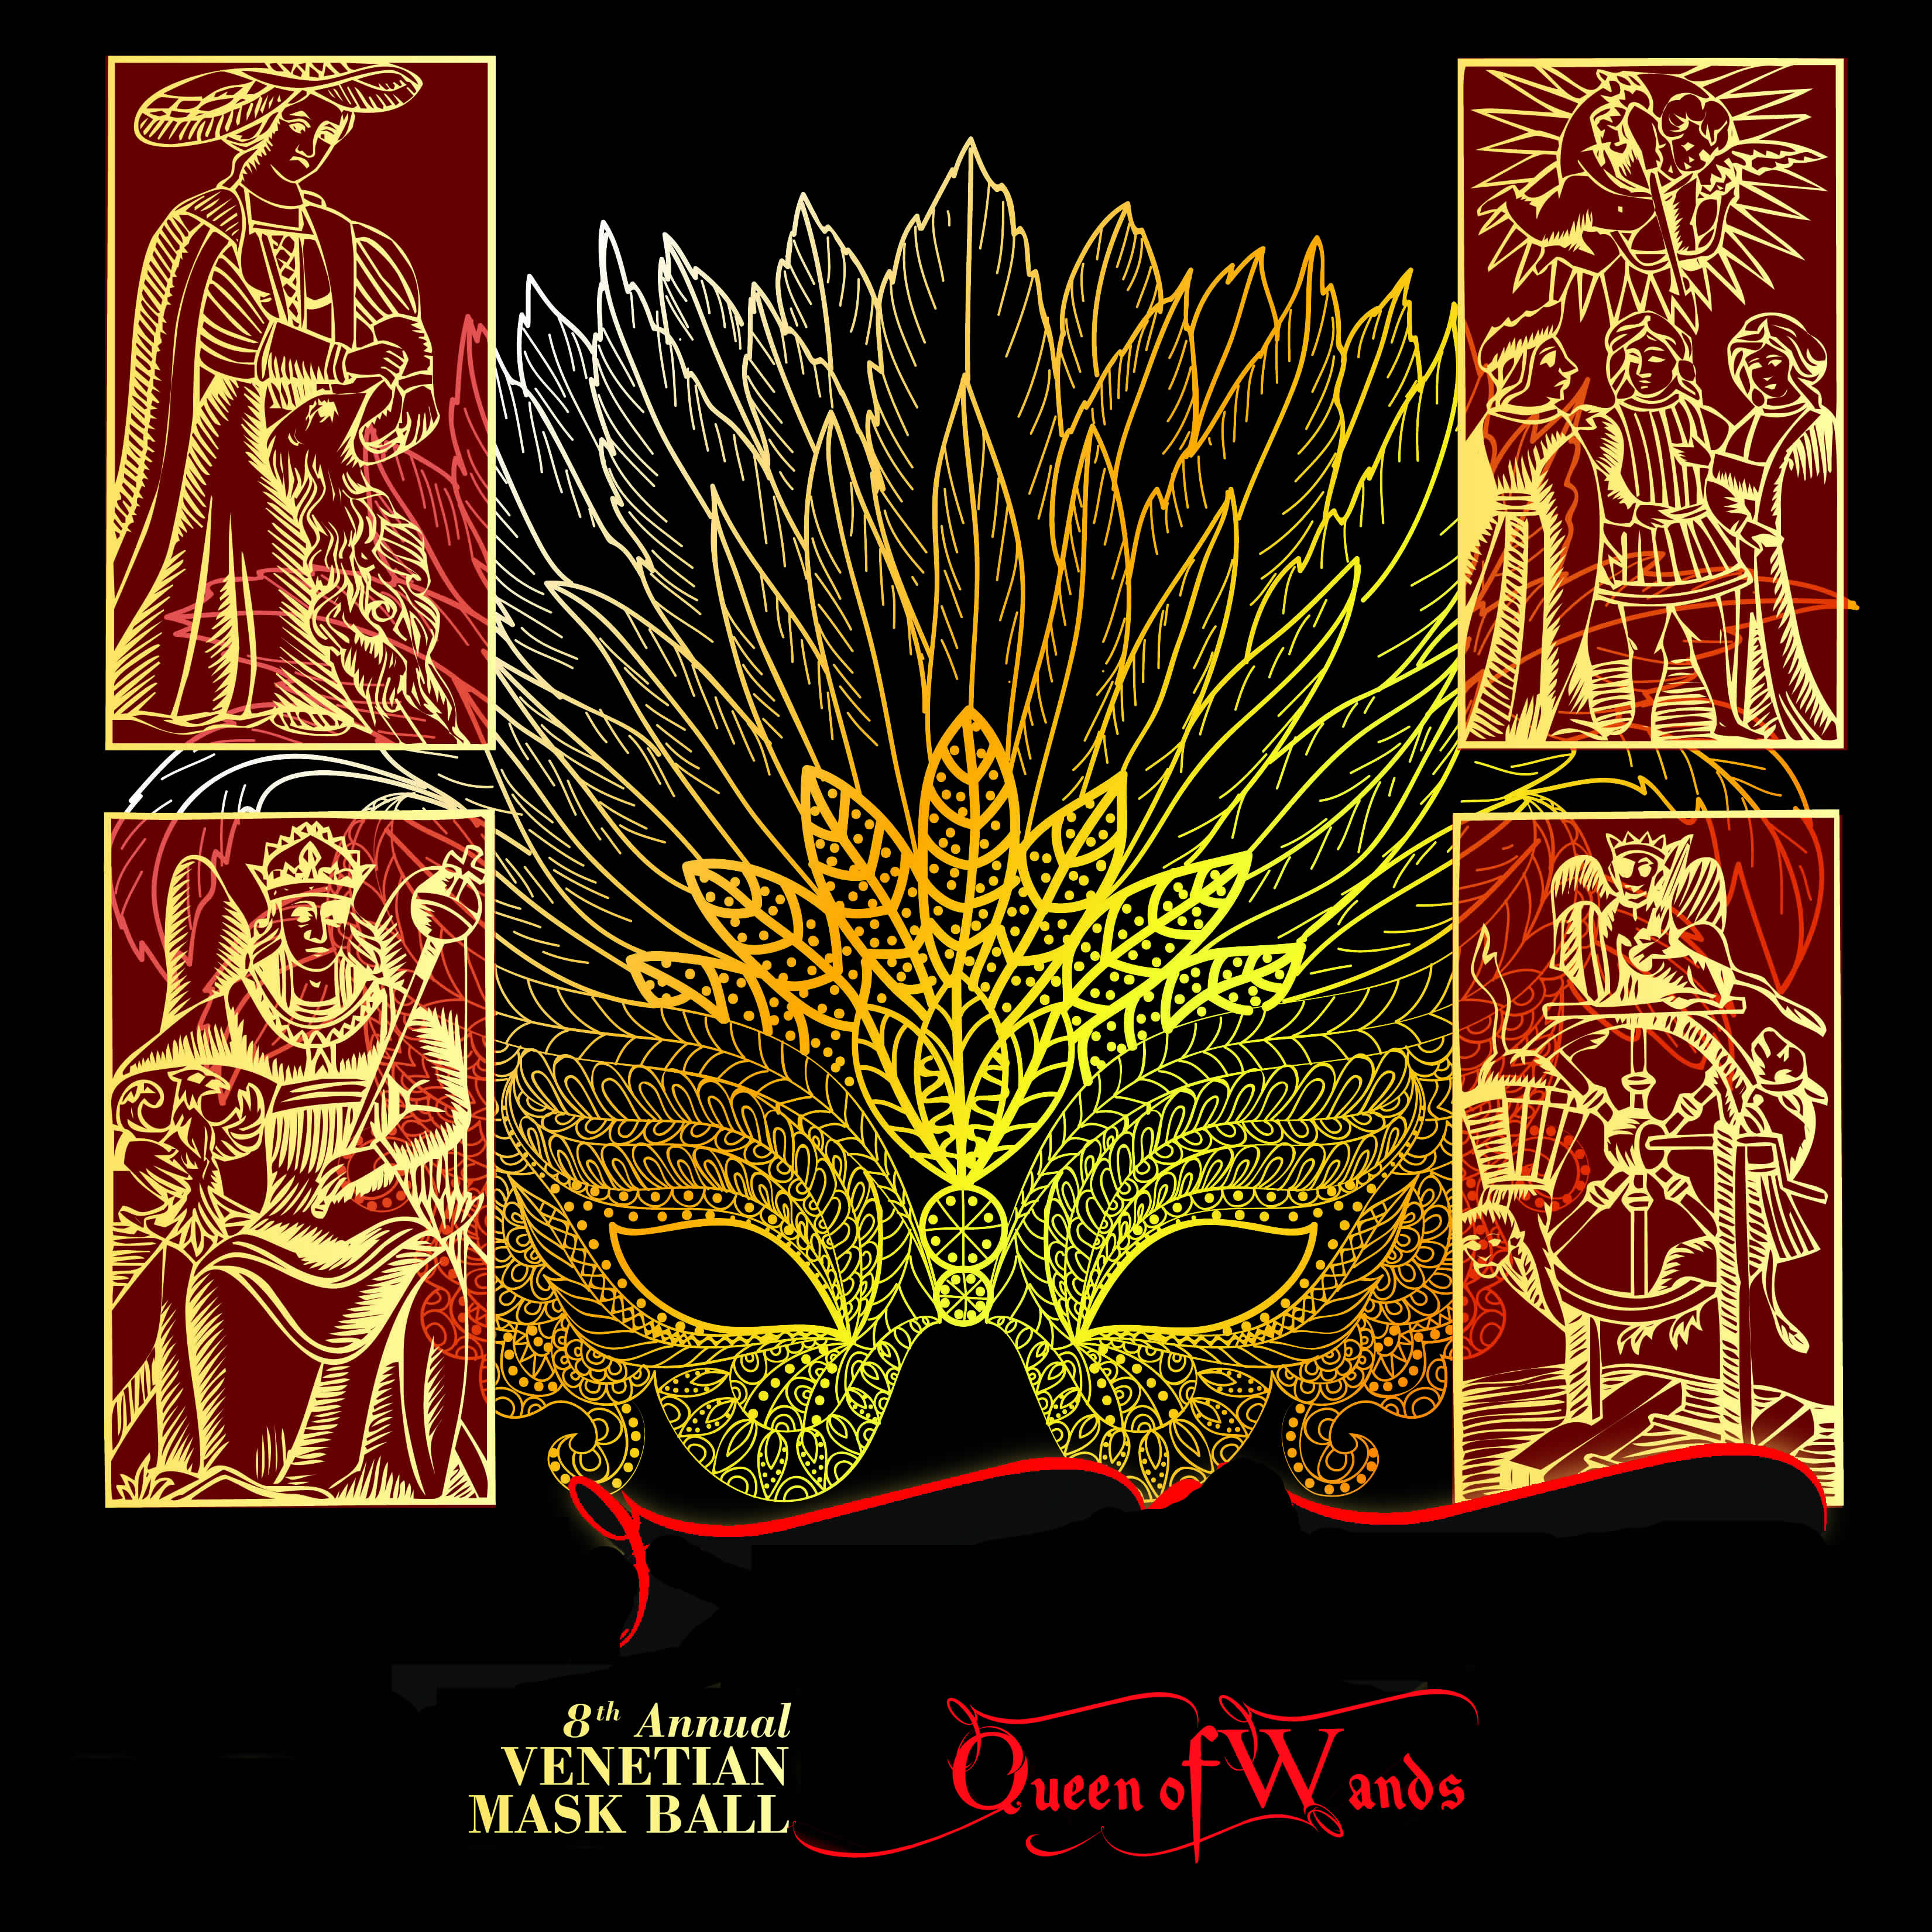 8th Annual Venetian Mask Ball - Queen of Wands